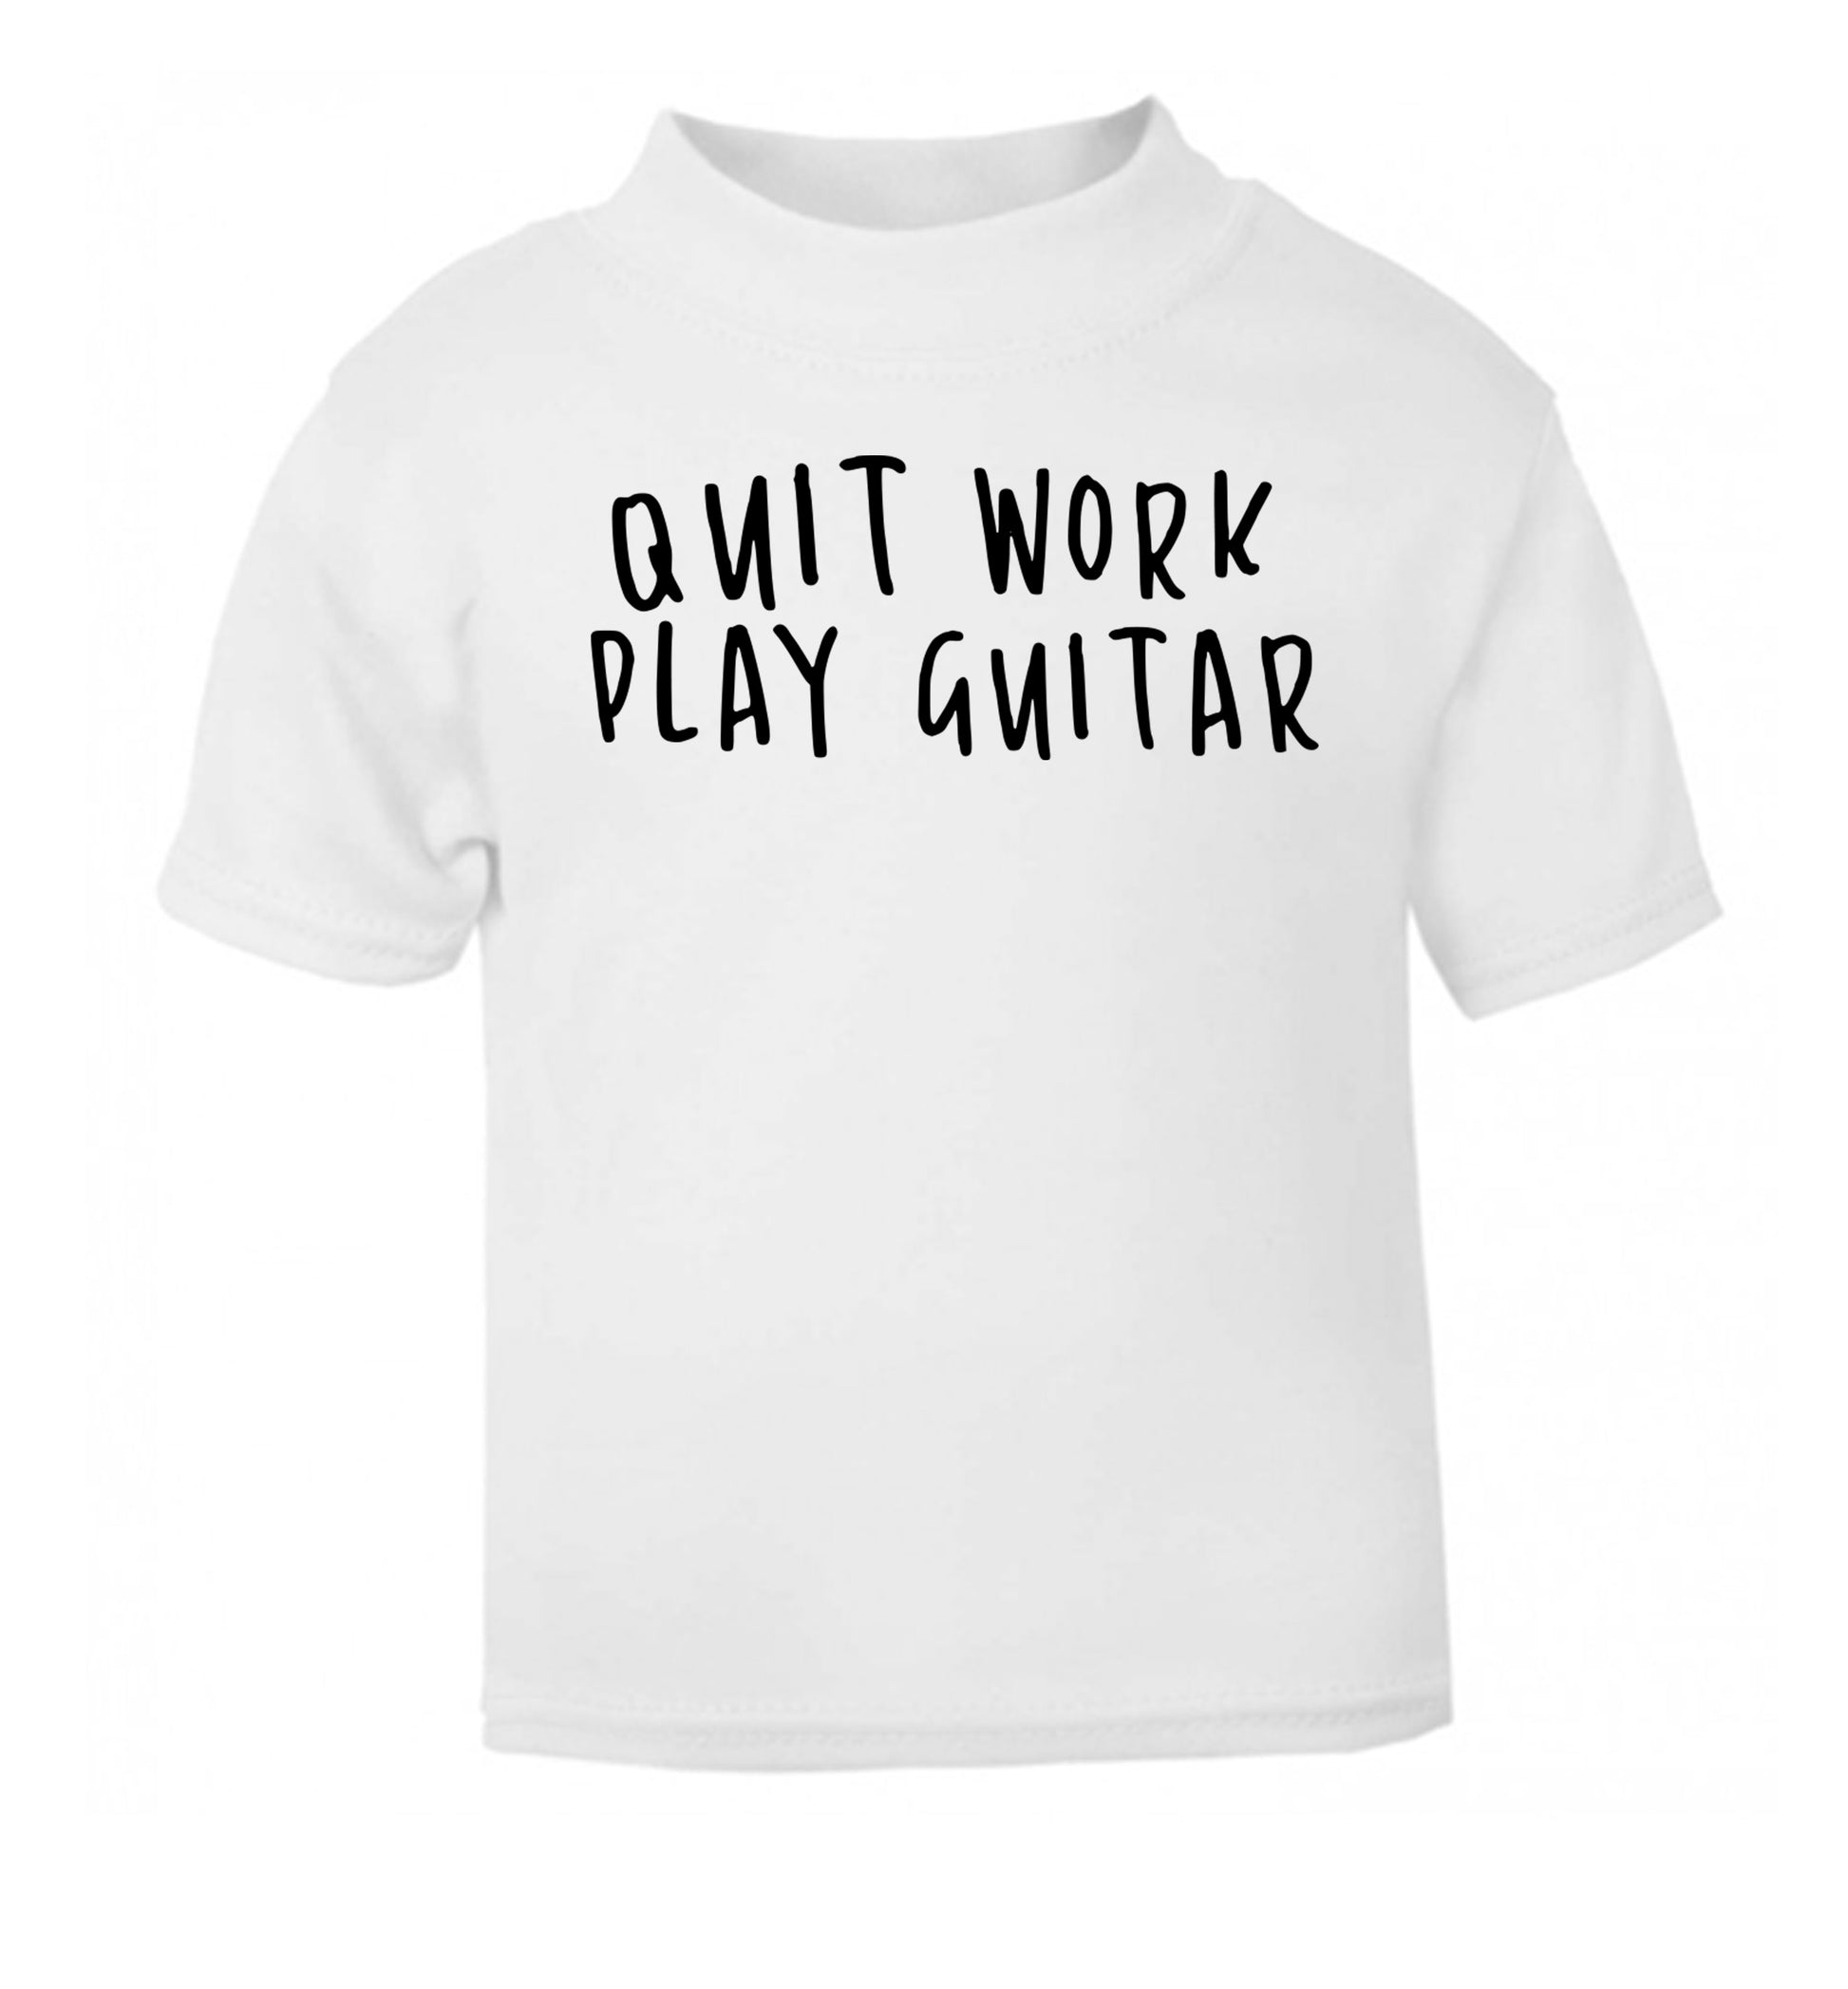 Quit work play guitar white Baby Toddler Tshirt 2 Years